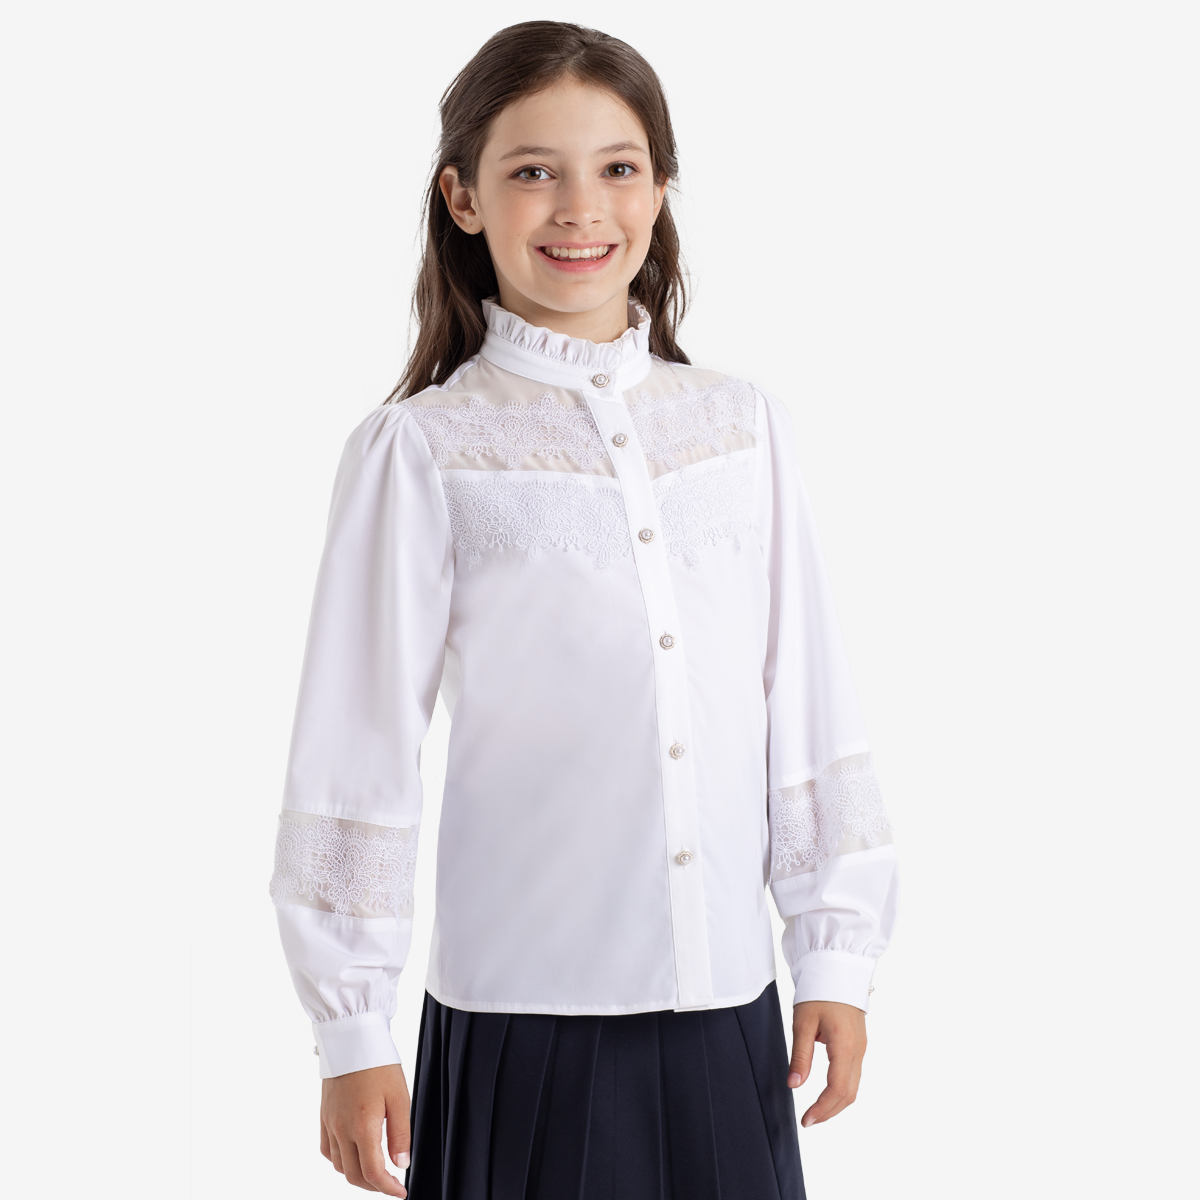 Блузка детская Kapika KJGCB06, белый, 146